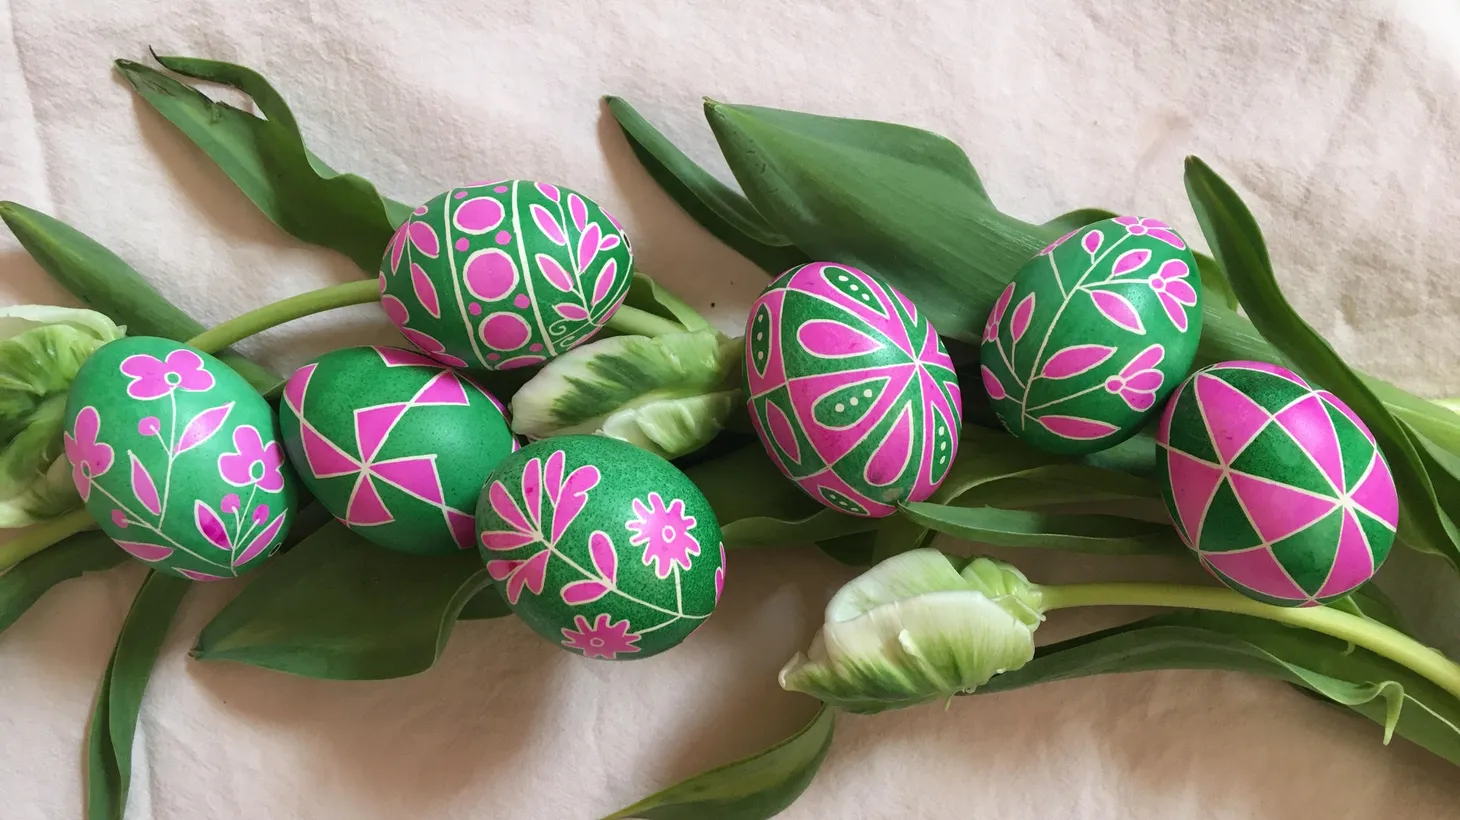 Hollow Real Blown out Eggshell Pysanka Ukrainian Easter Egg Ornament 